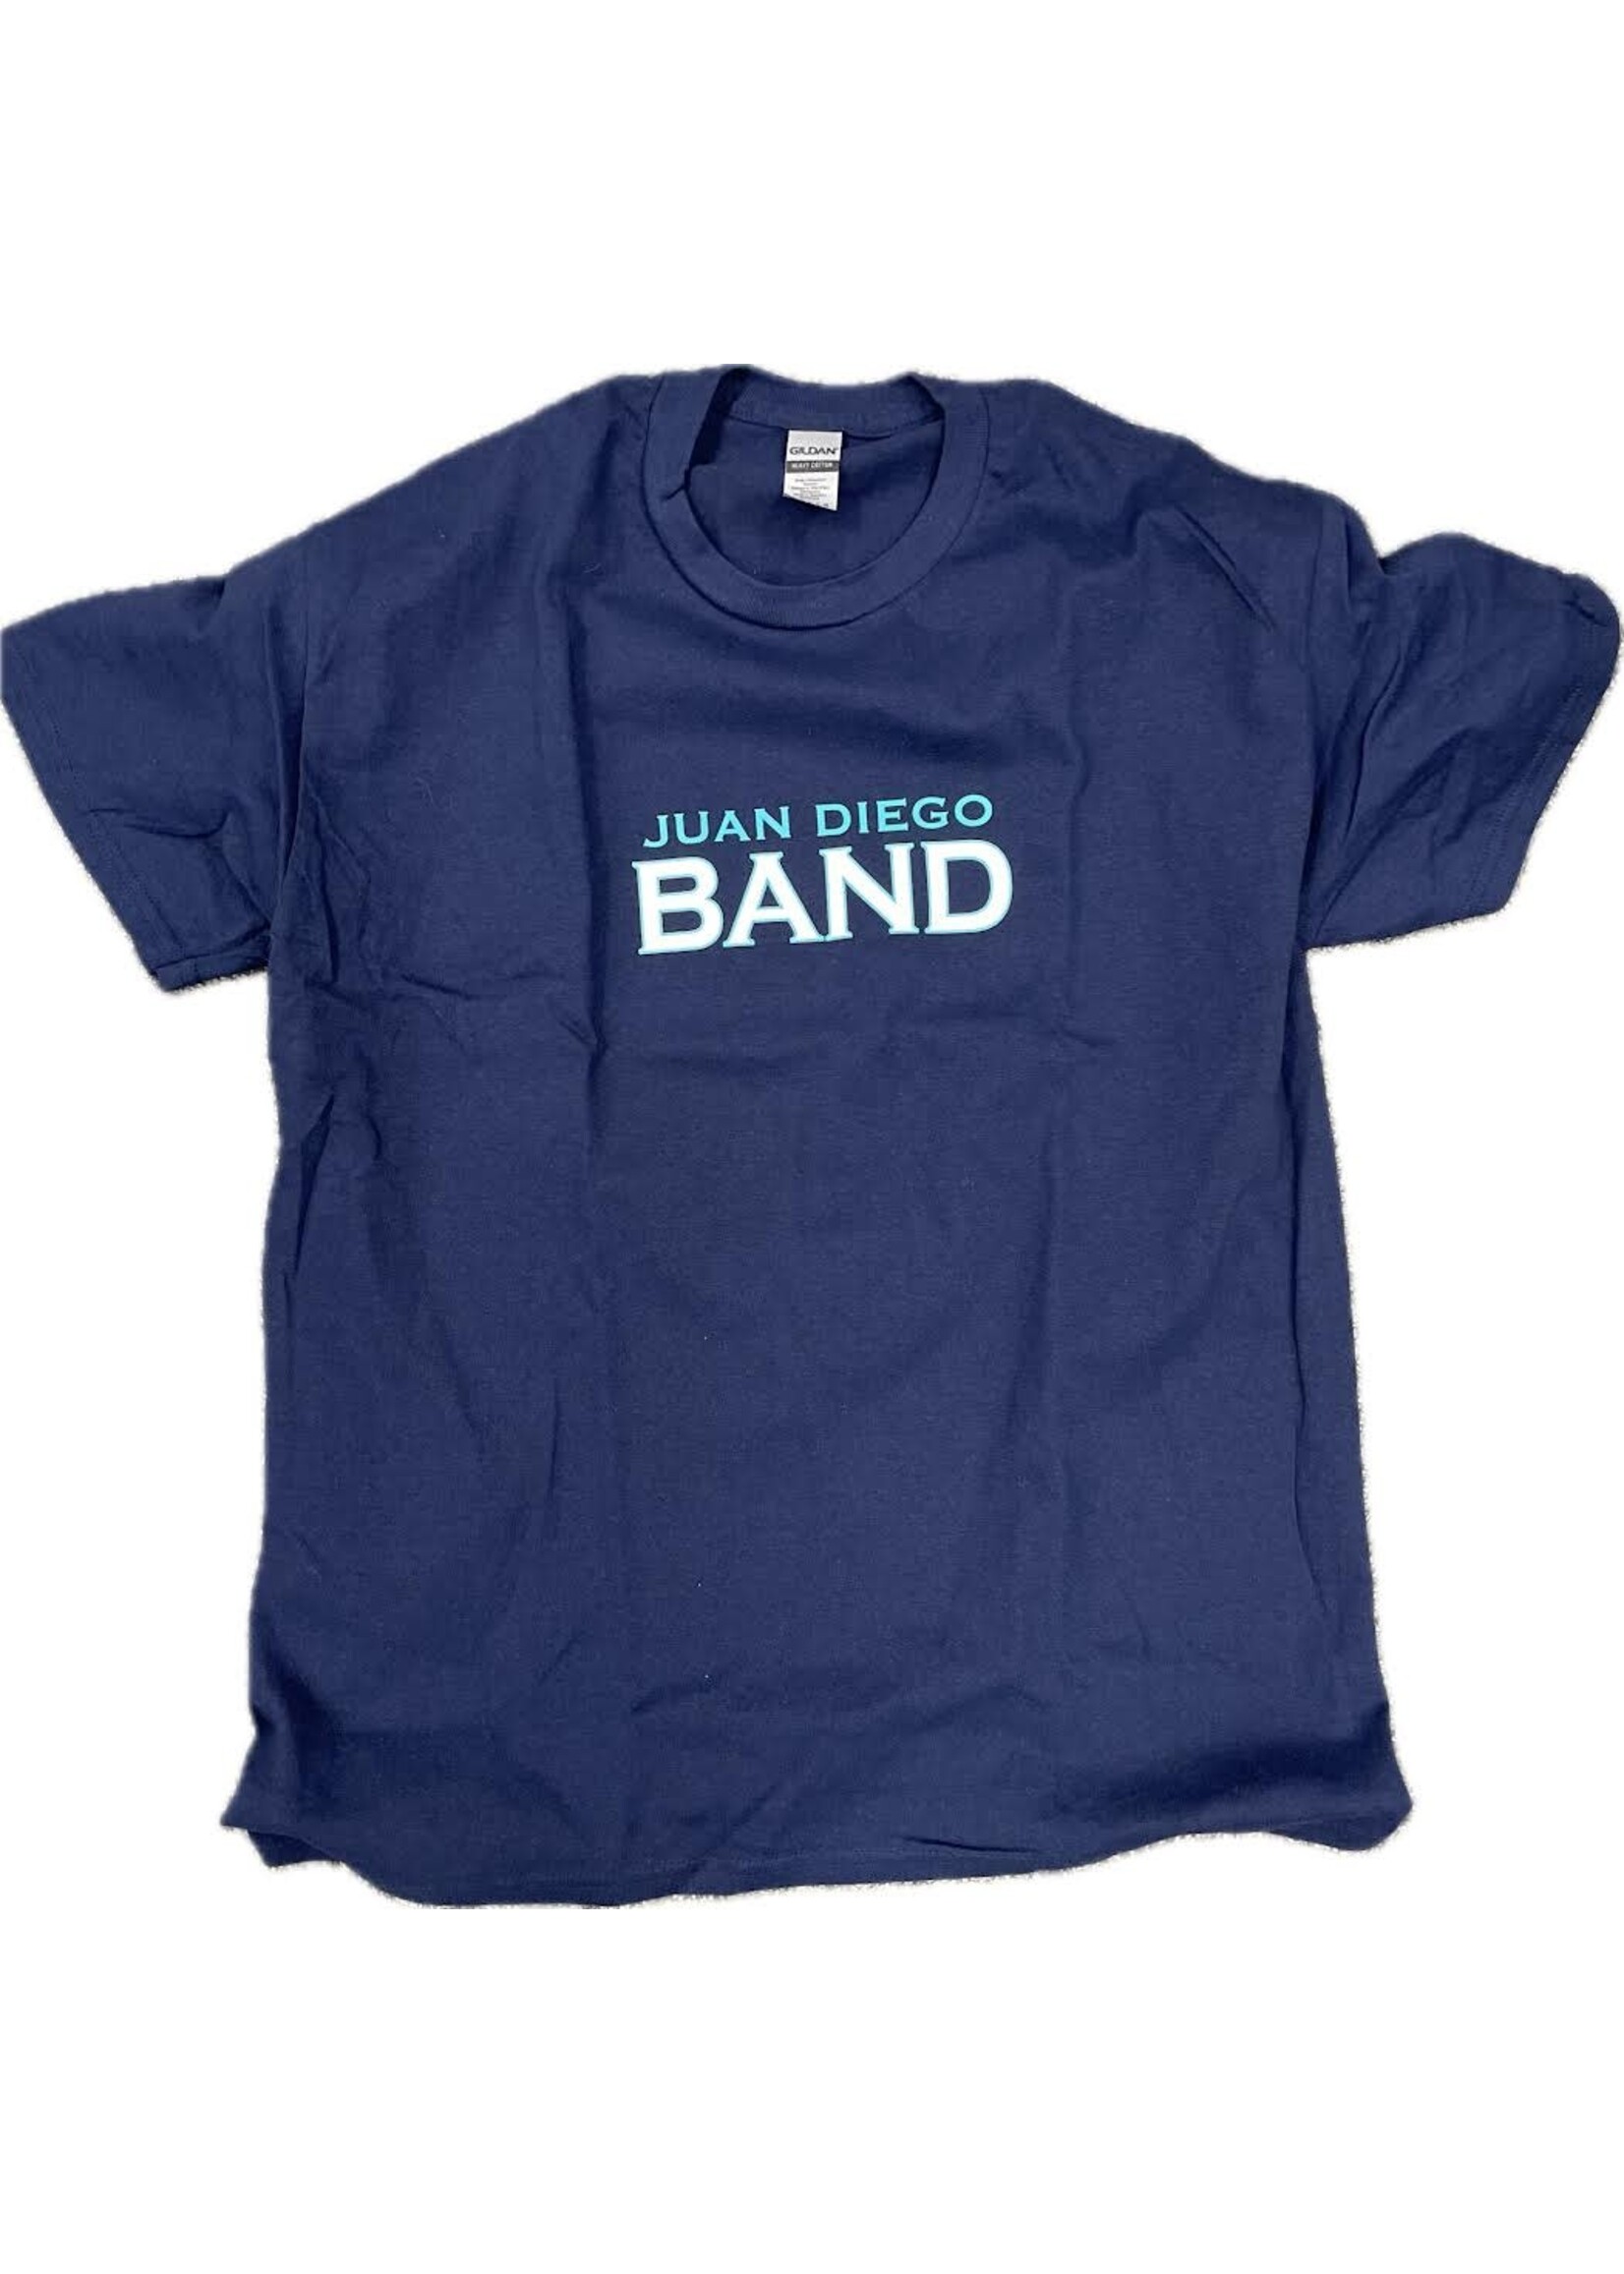 NON-UNIFORM Band, Juan Diego Band Custom Order  Unisex s/s t-shirt